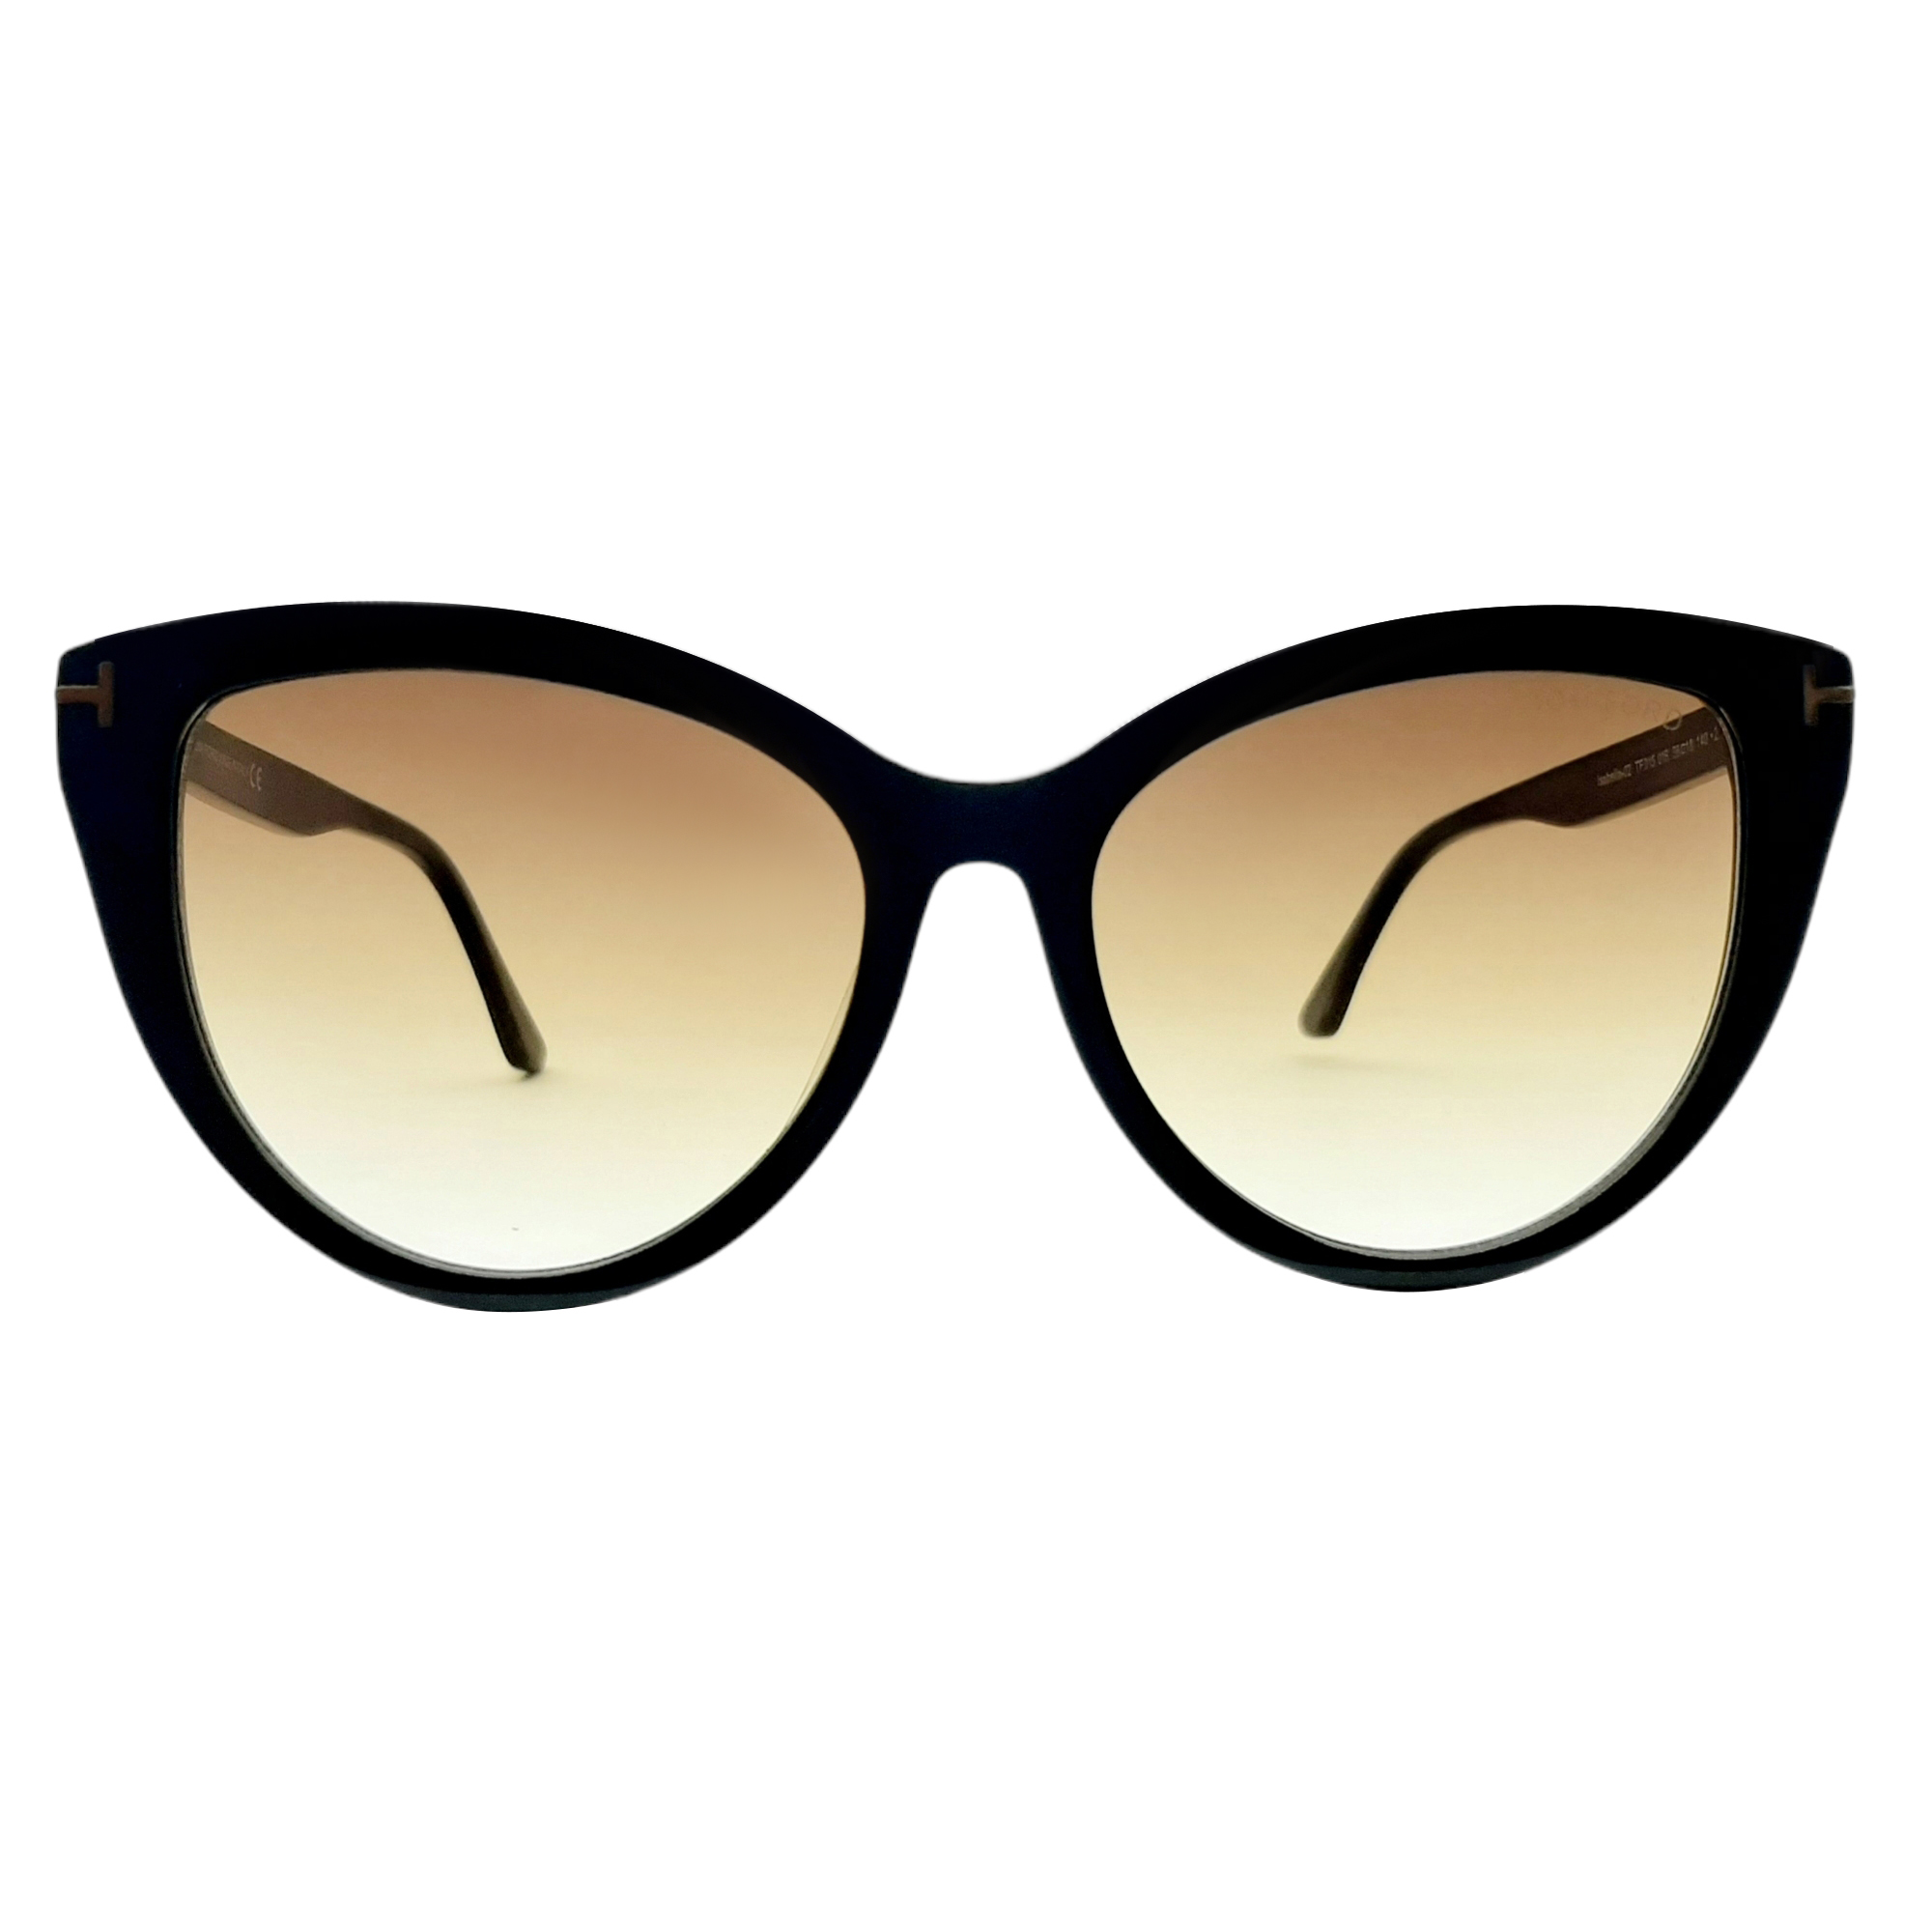 عینک آفتابی زنانه تام فورد مدل ISABELLA02-TF915-01b